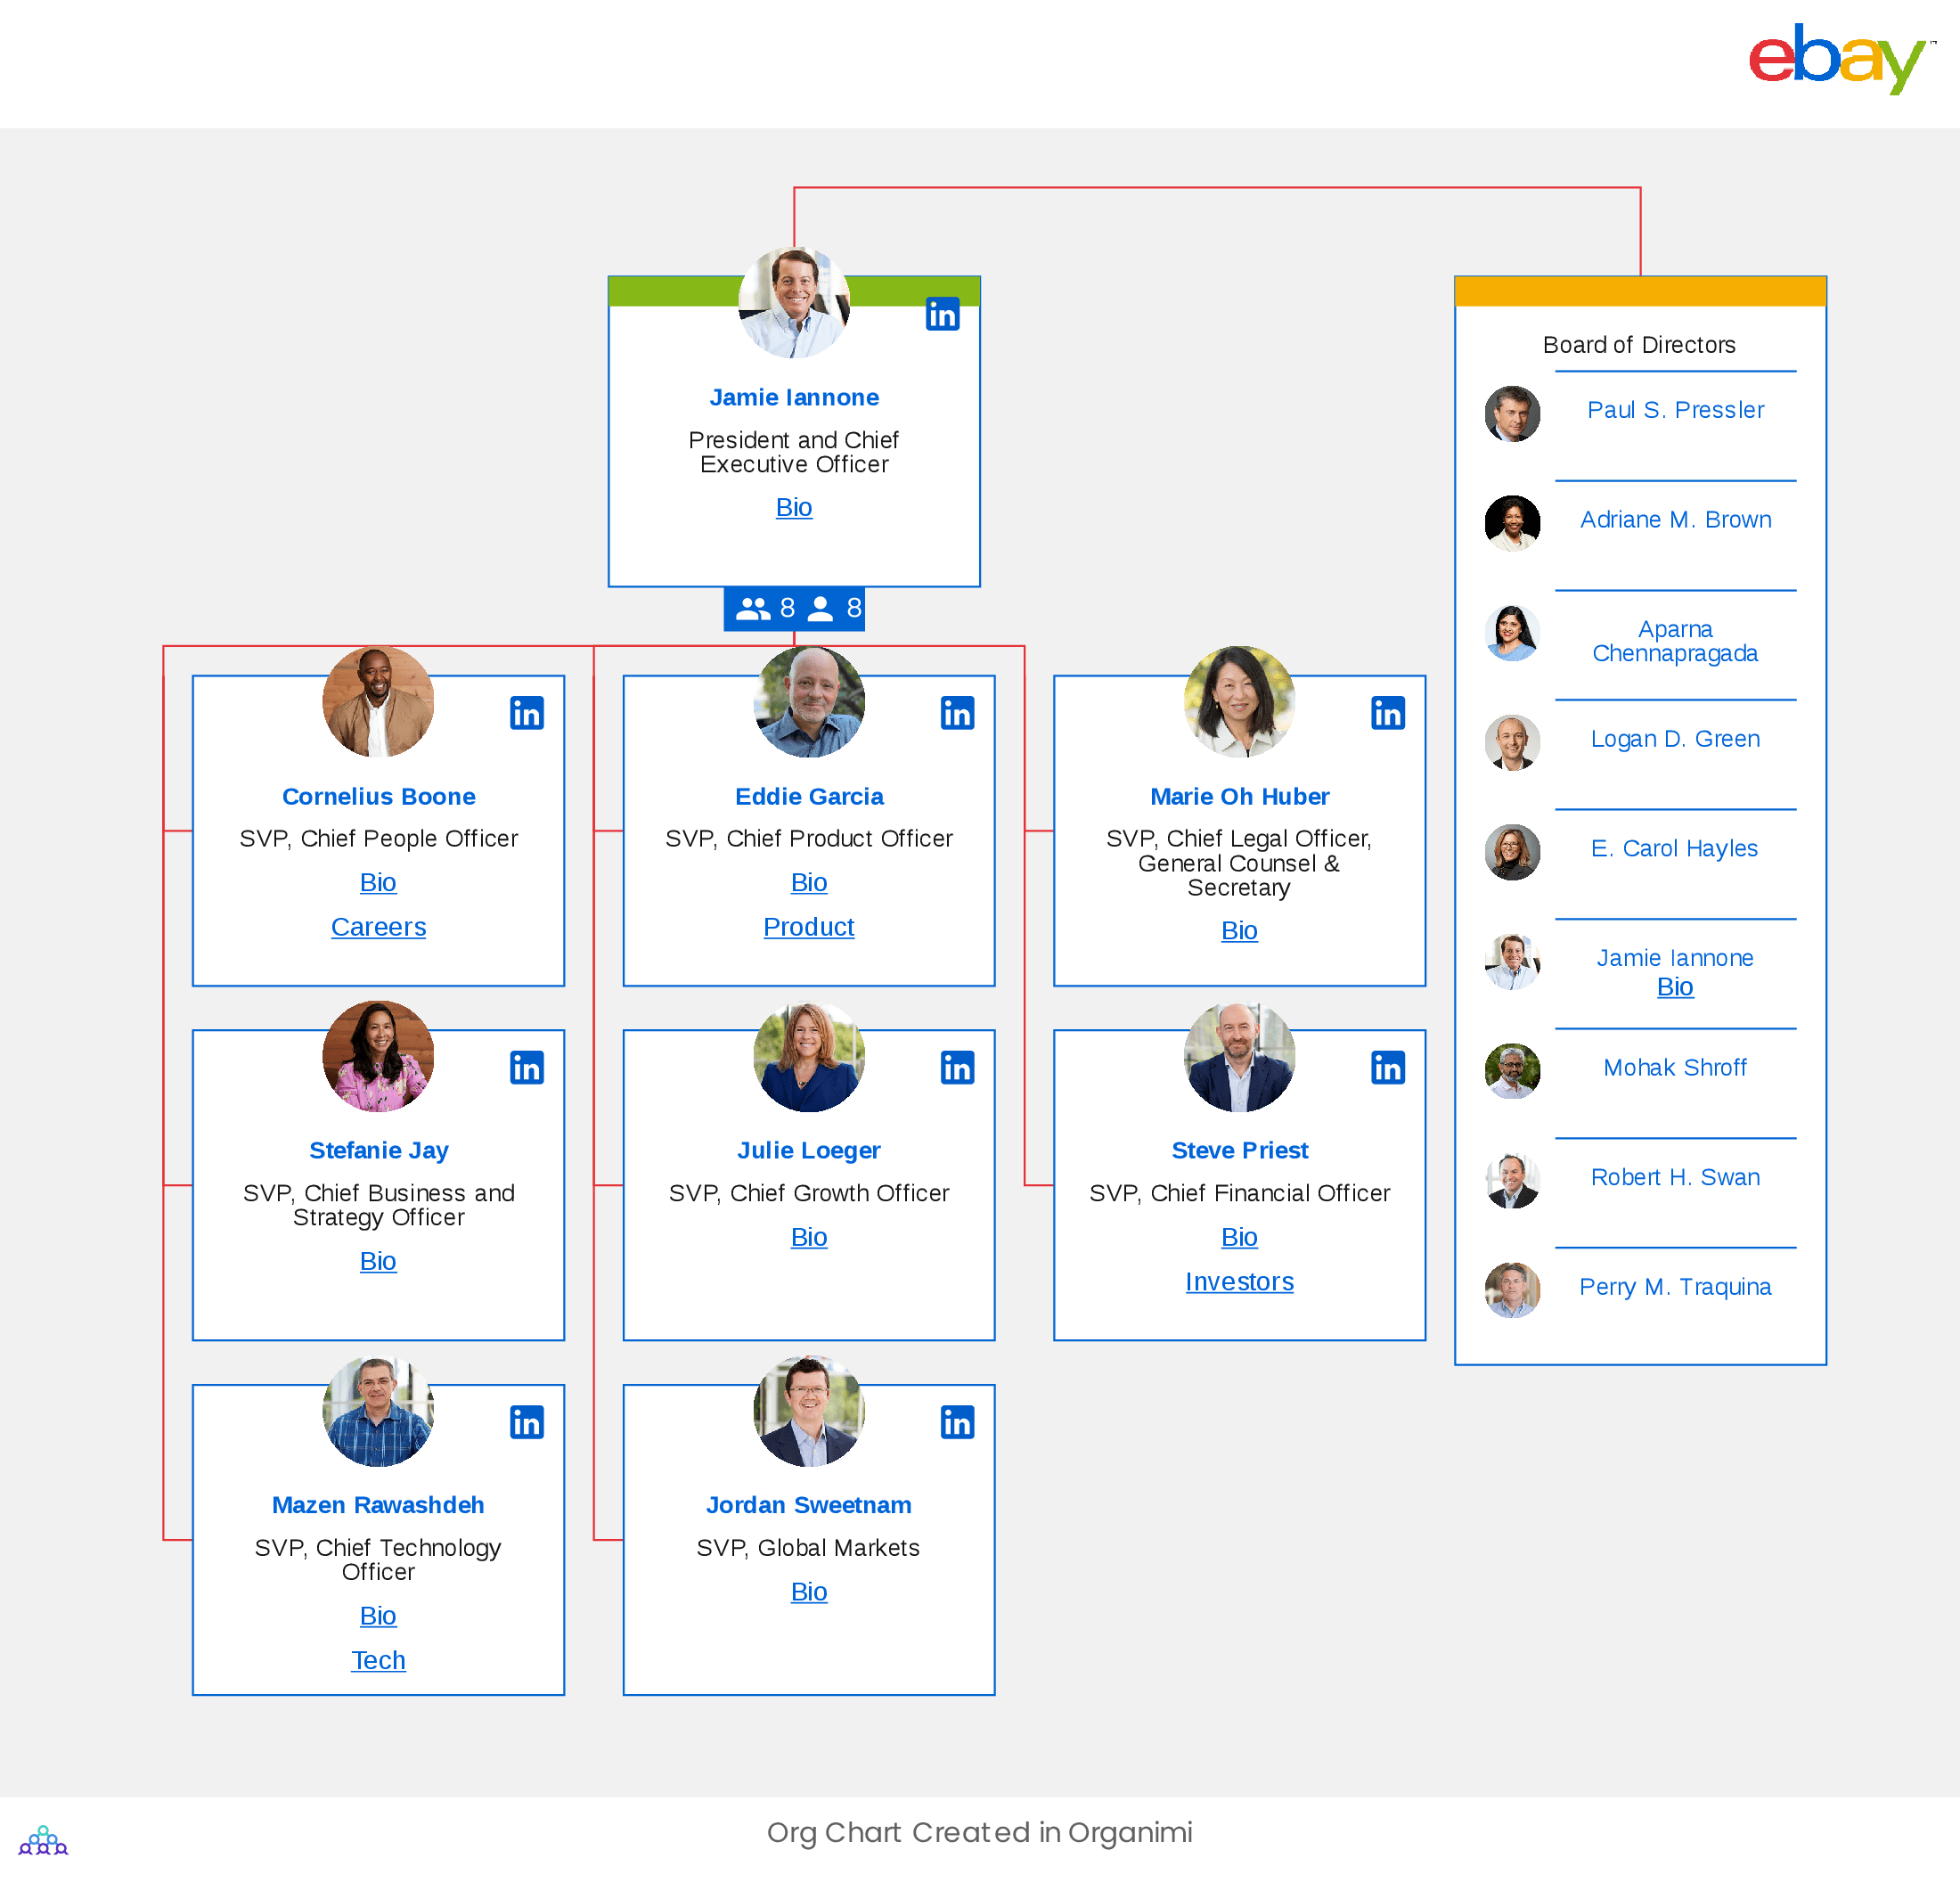 eBay's Organizational Structure Org Chart